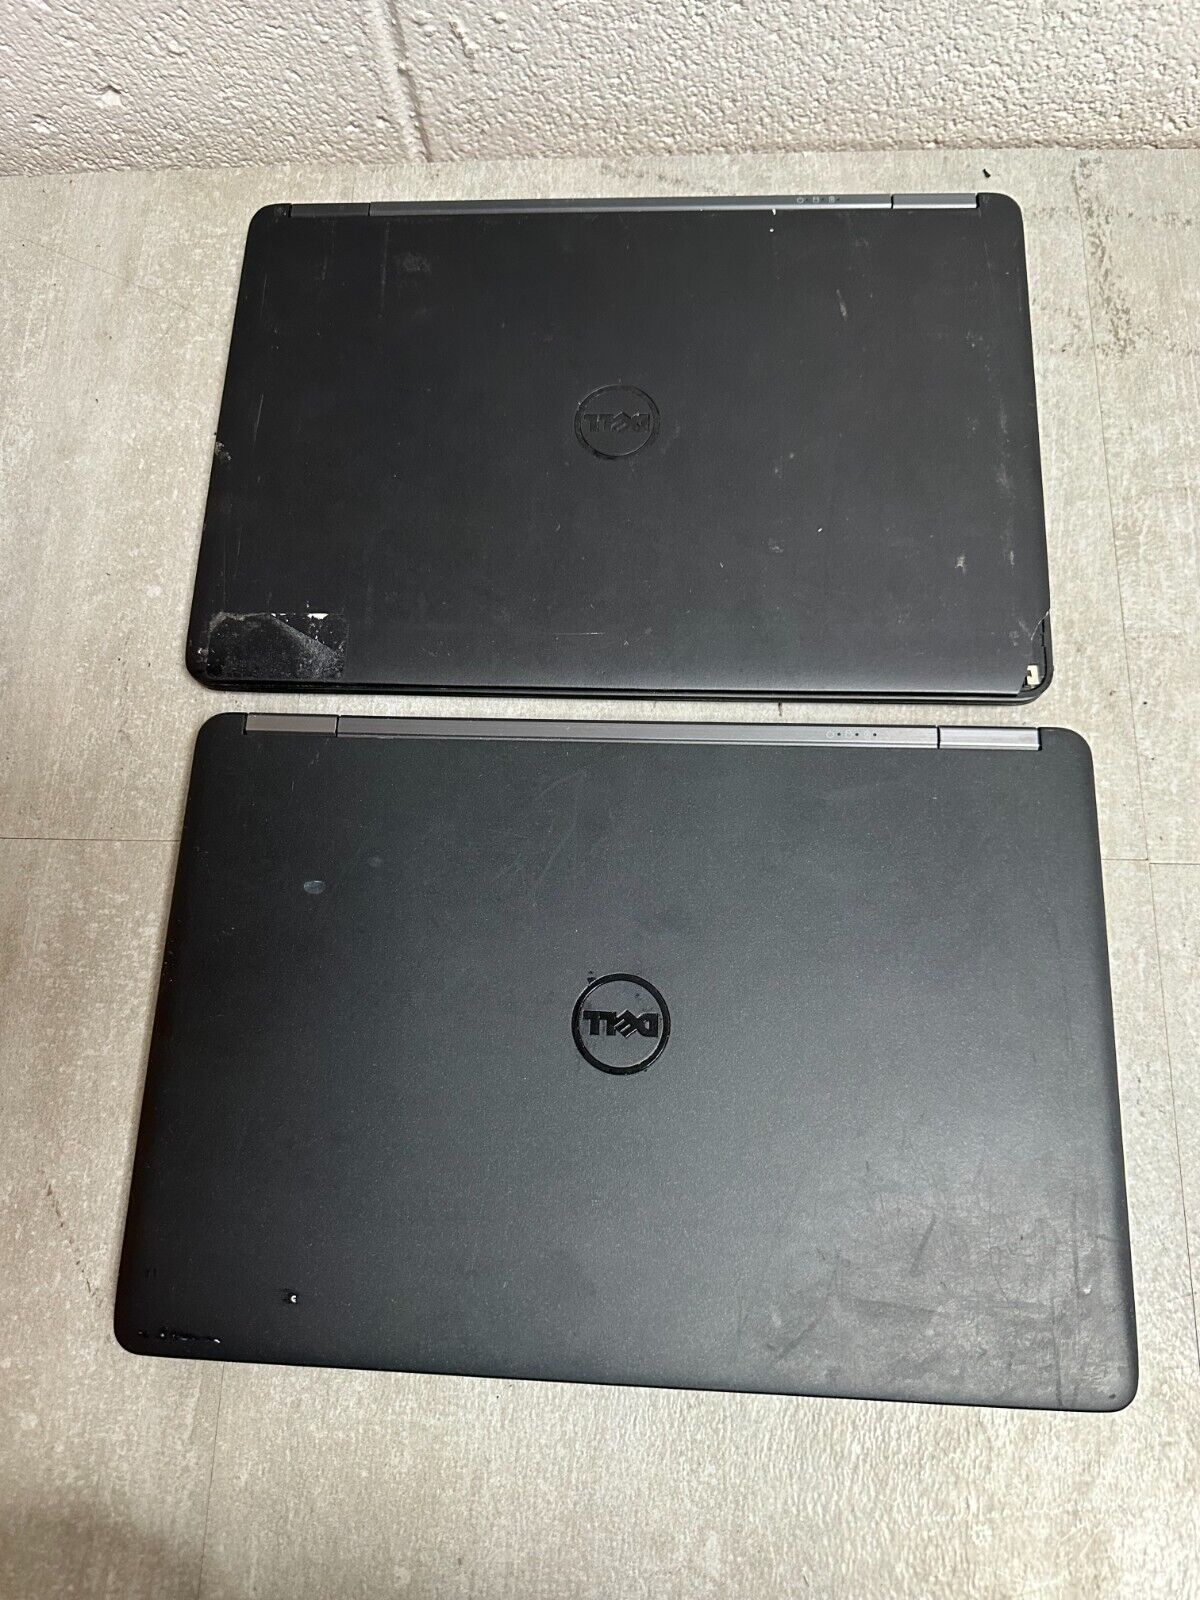 LOT OF 2 - Dell Latitude E7250 12.5" Laptop i3-5010U 2.10GHz 4GB Ram 128GB SSD